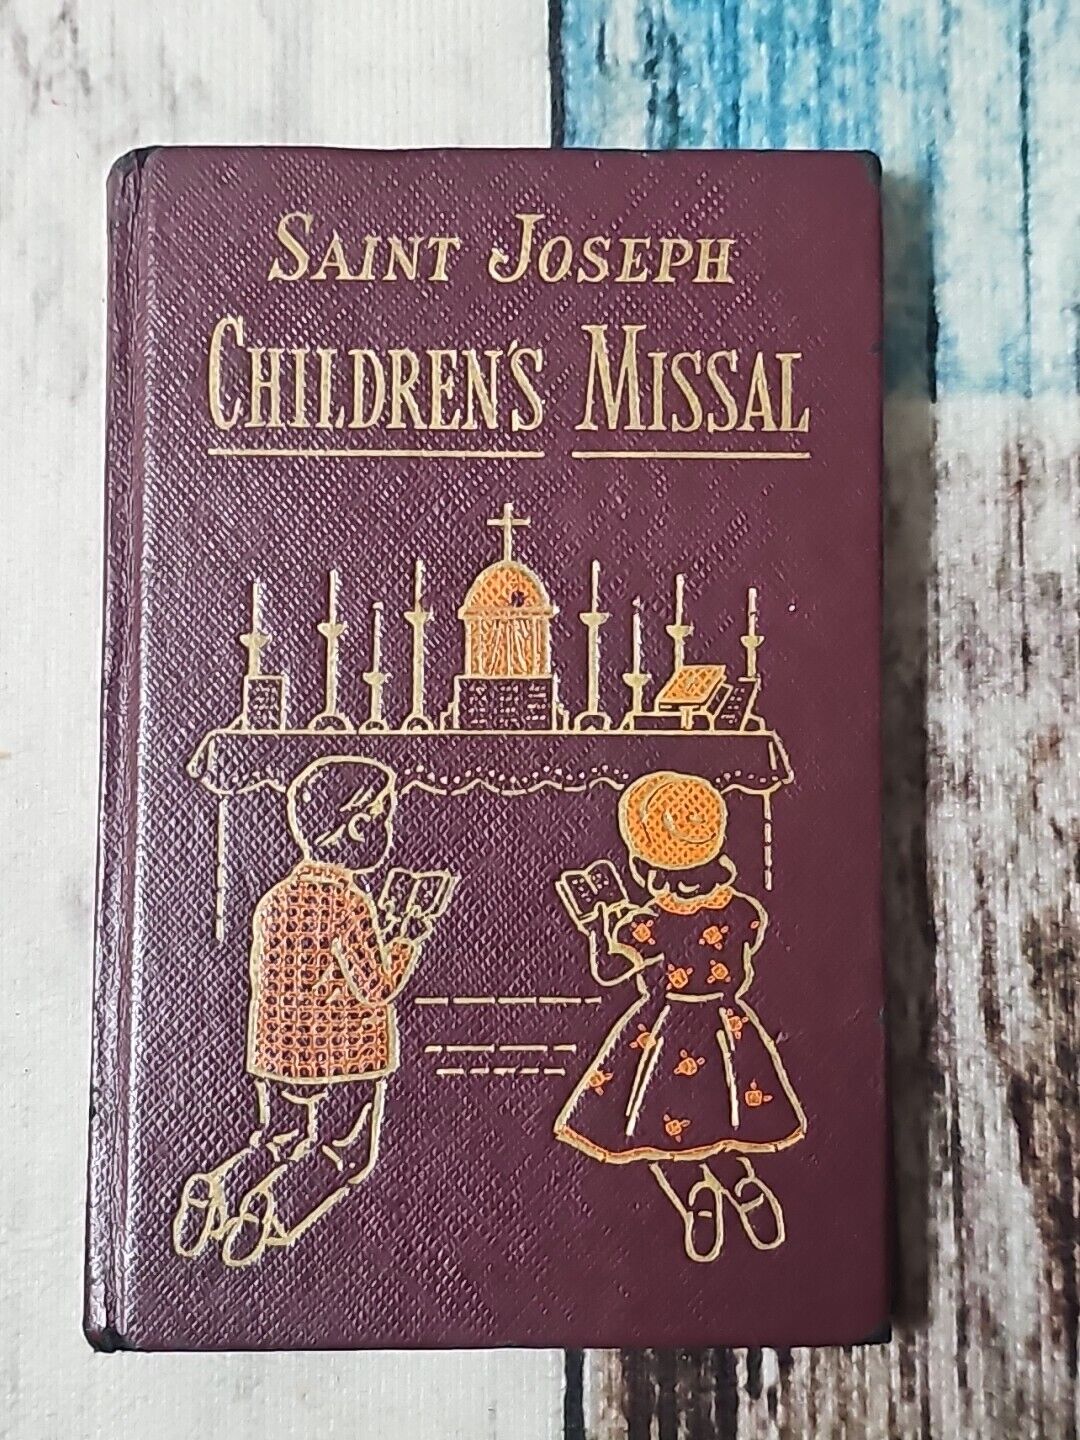 St Joseph Childrens Missal 1954 Vintage Catholic Book Color Illustrations 128pgs